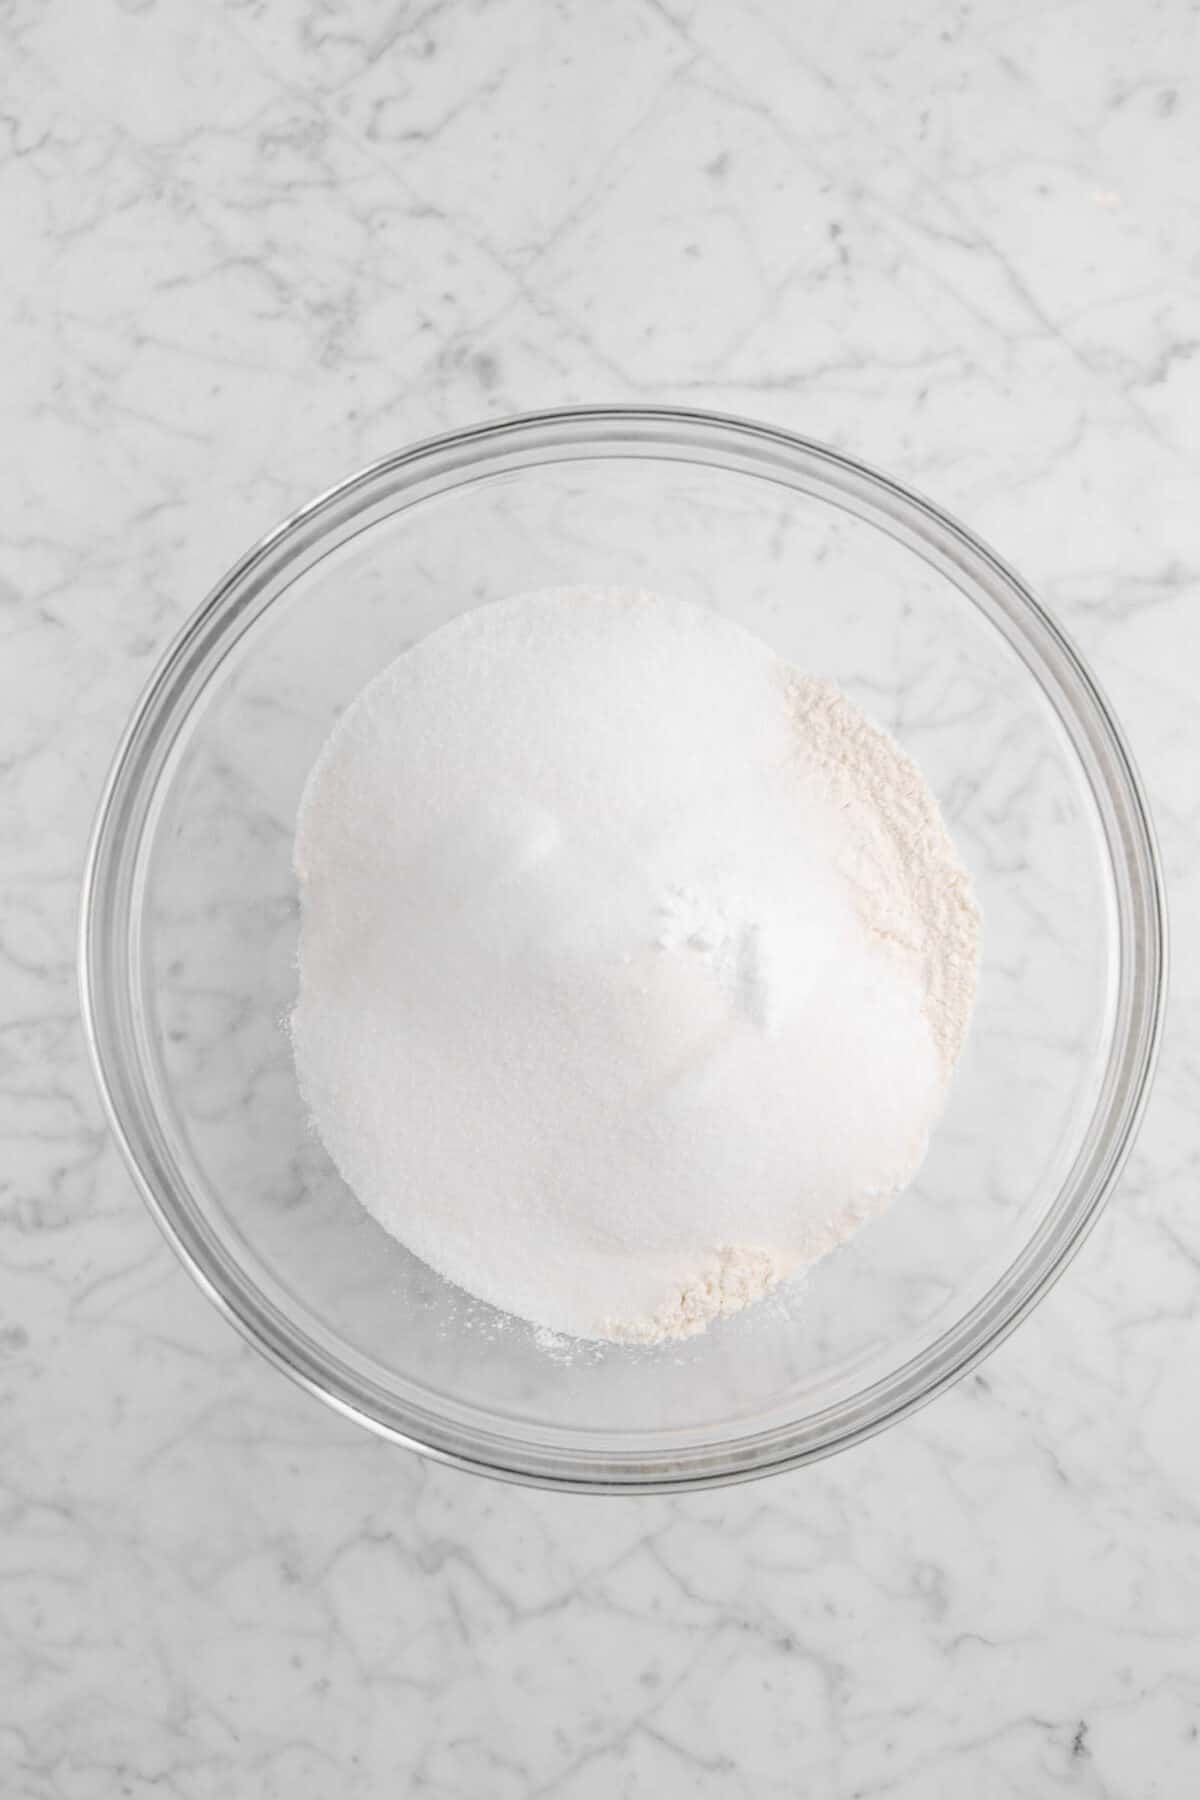 flour, salt, sugar, baking powder, and baking soda in a glass bowl